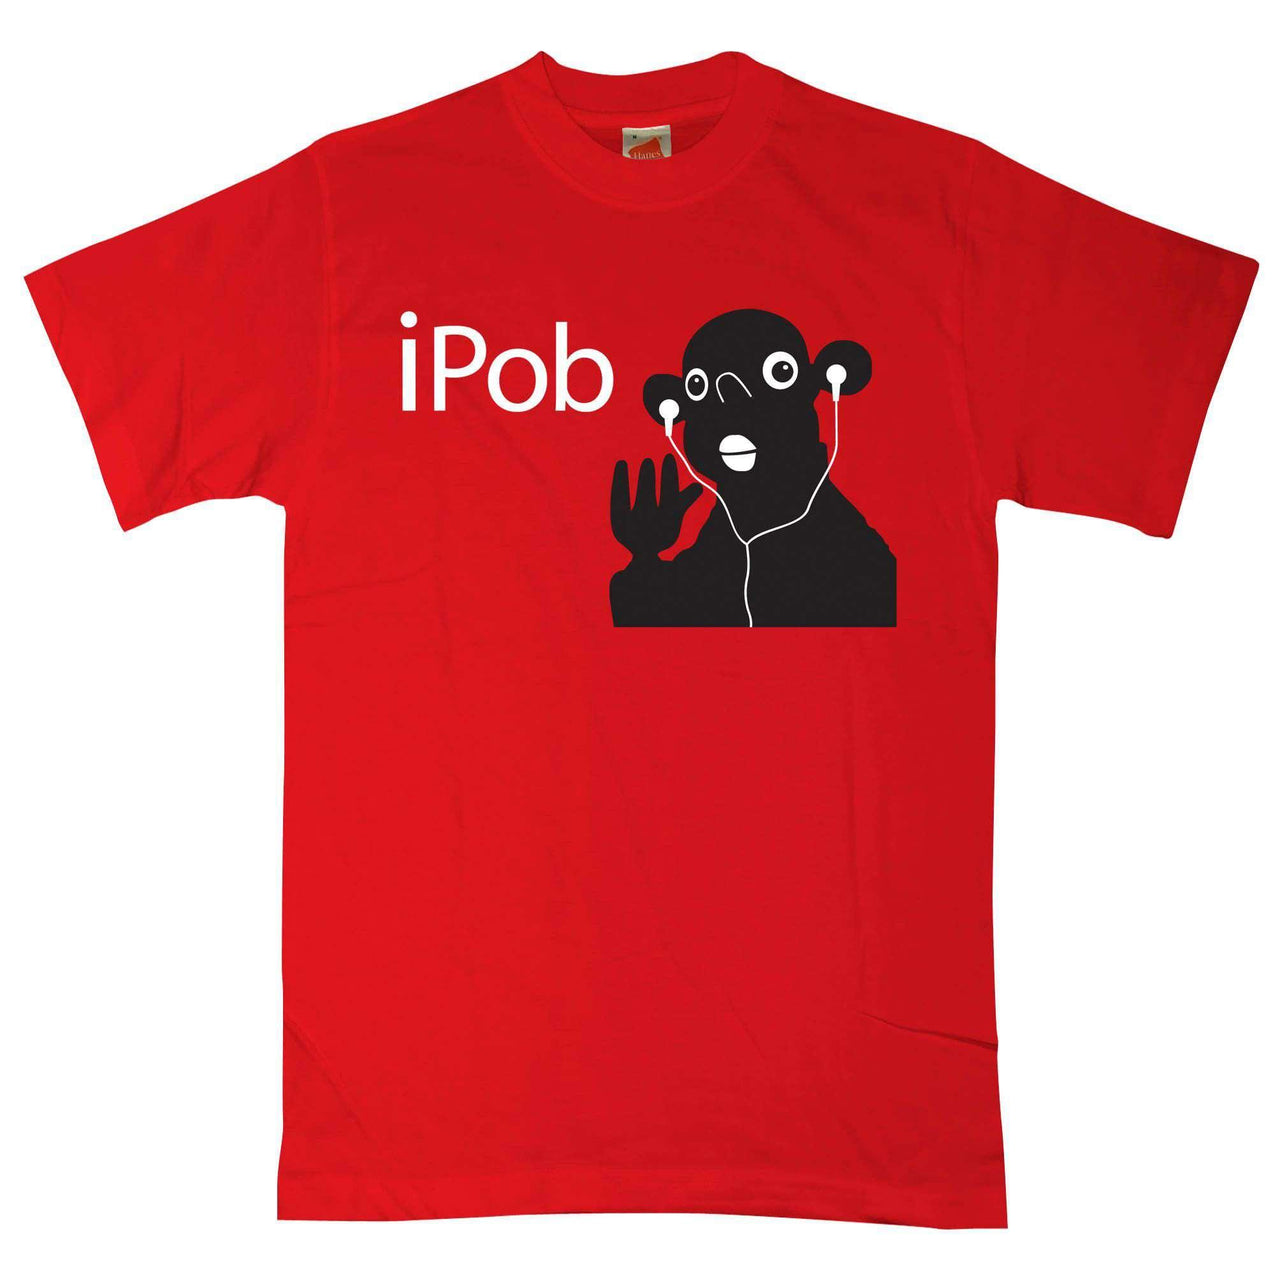 iPob T-Shirt For Men 8Ball